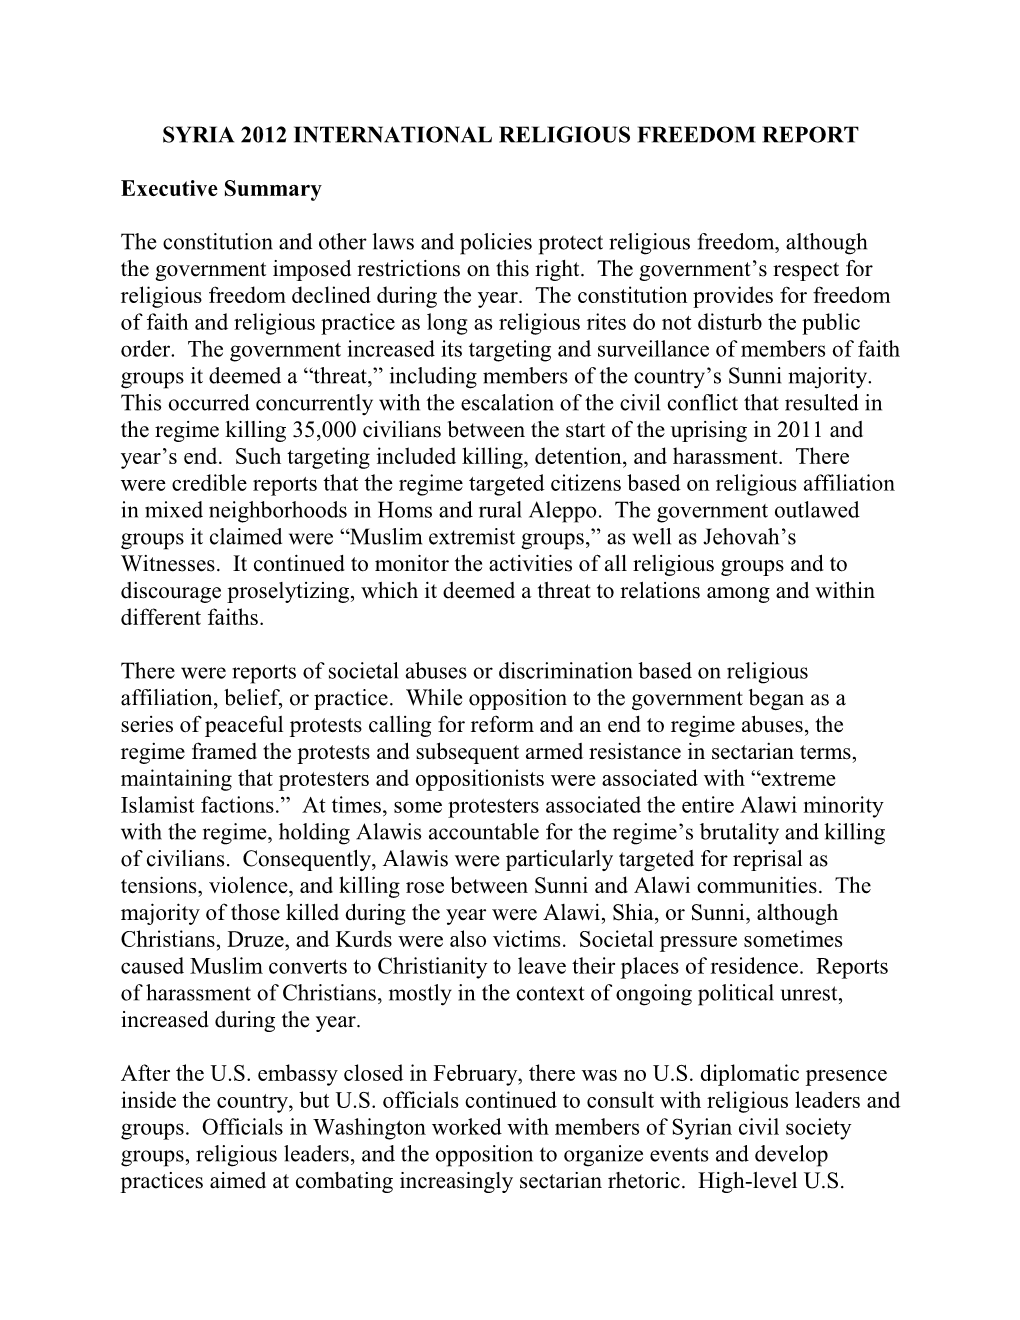 Syria 2012 International Religious Freedom Report